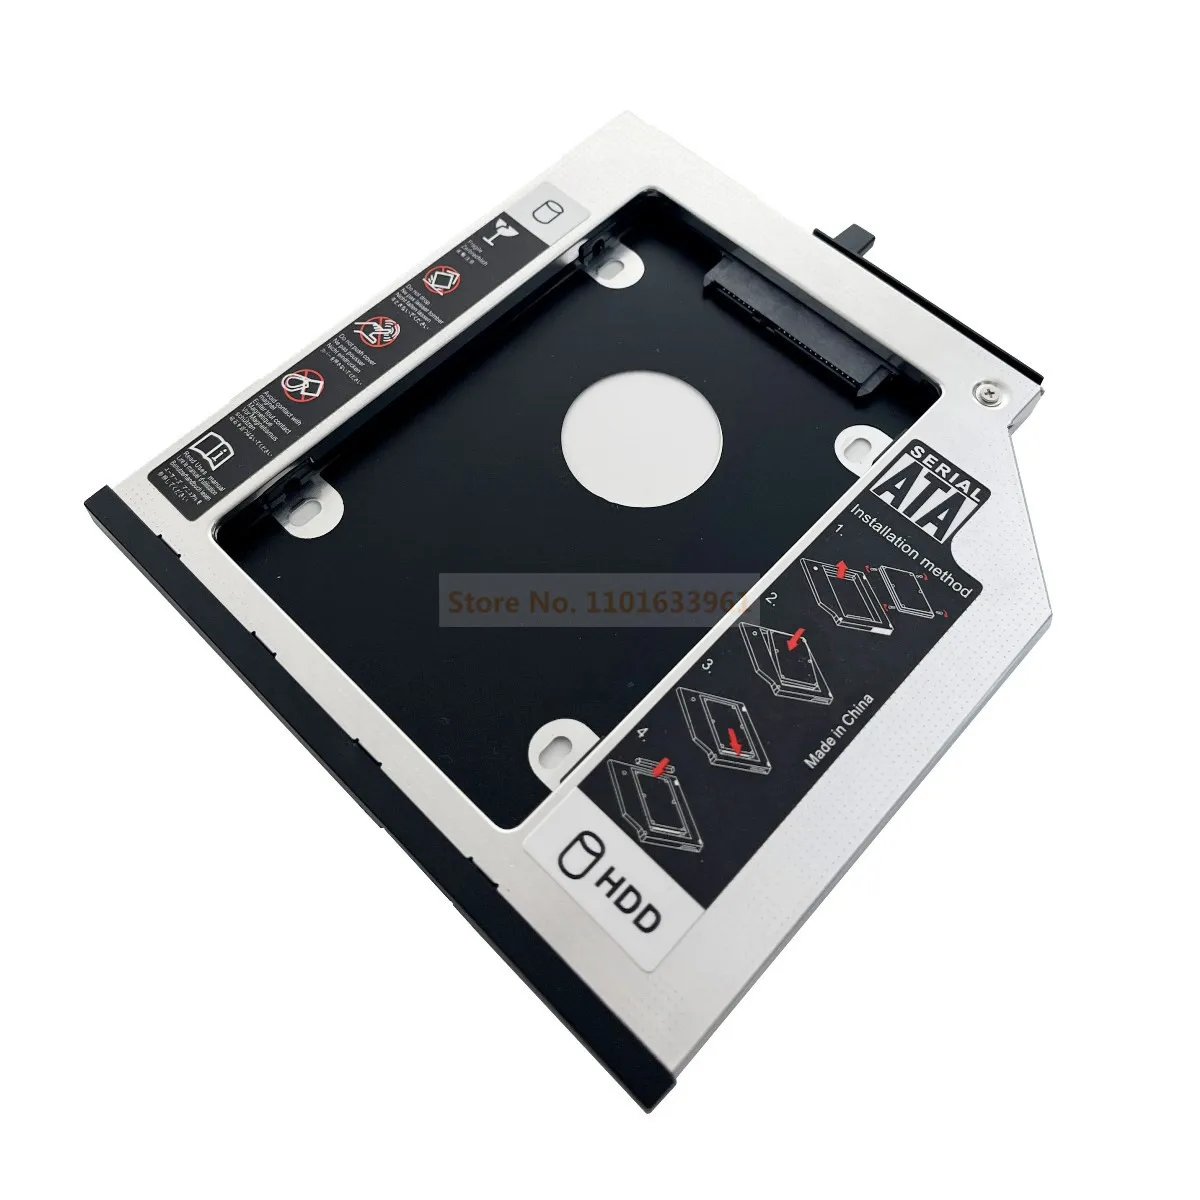 

Bezel Panel Faceplate SATA 2nd Hard Drive HDD SSD Optical Caddy Bracket for IBM Lenovo ThinkPad T400 T400s T410 T500 W500 W700